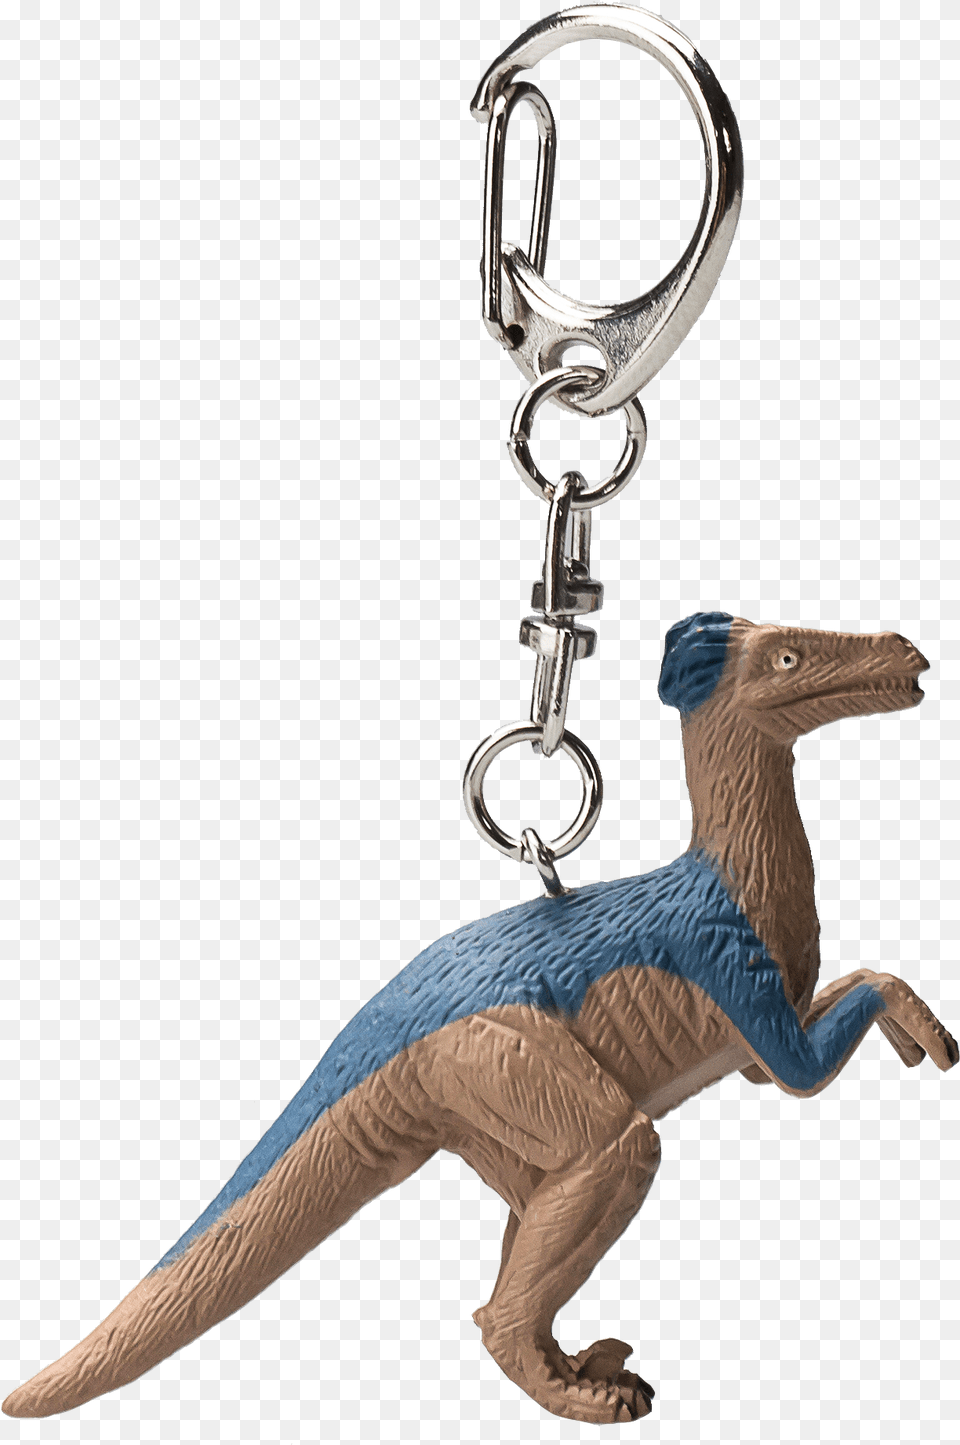 Velociraptor, Accessories, Animal, Bird Png Image